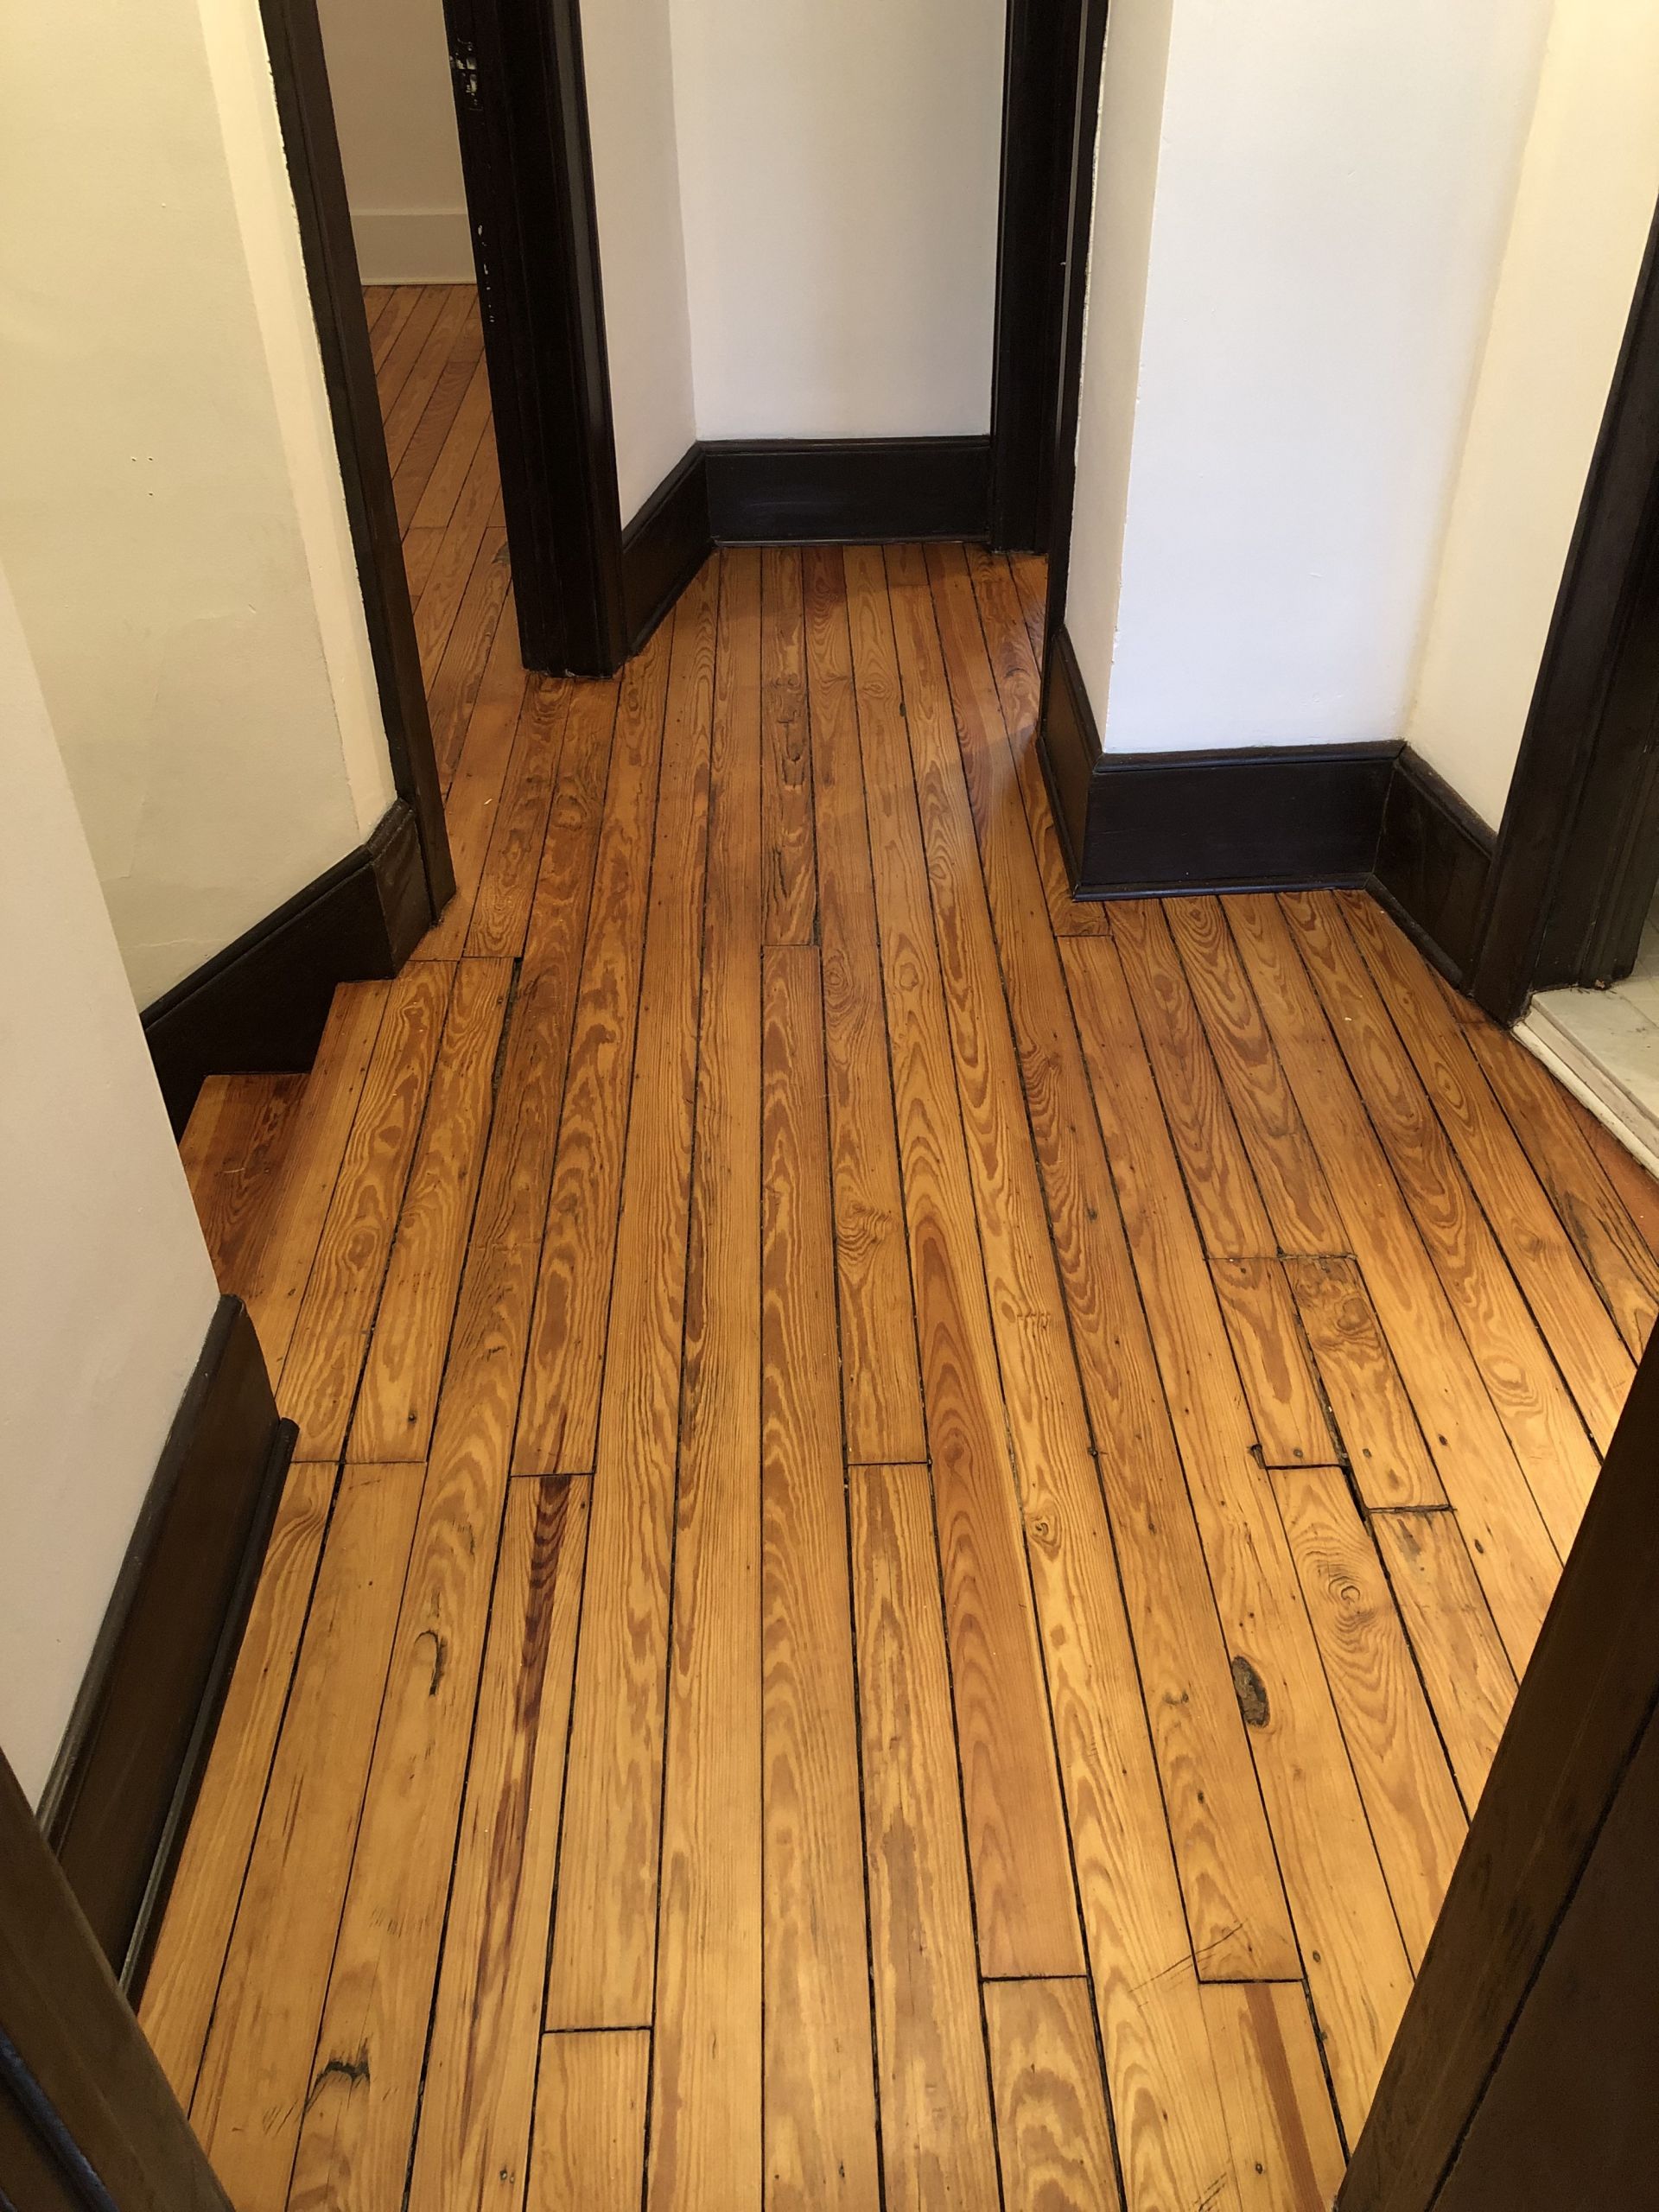 Refinish Wood Floor DIY
 HOW TO REFINISH HARDWOOD FLOORS Step by Step Do It